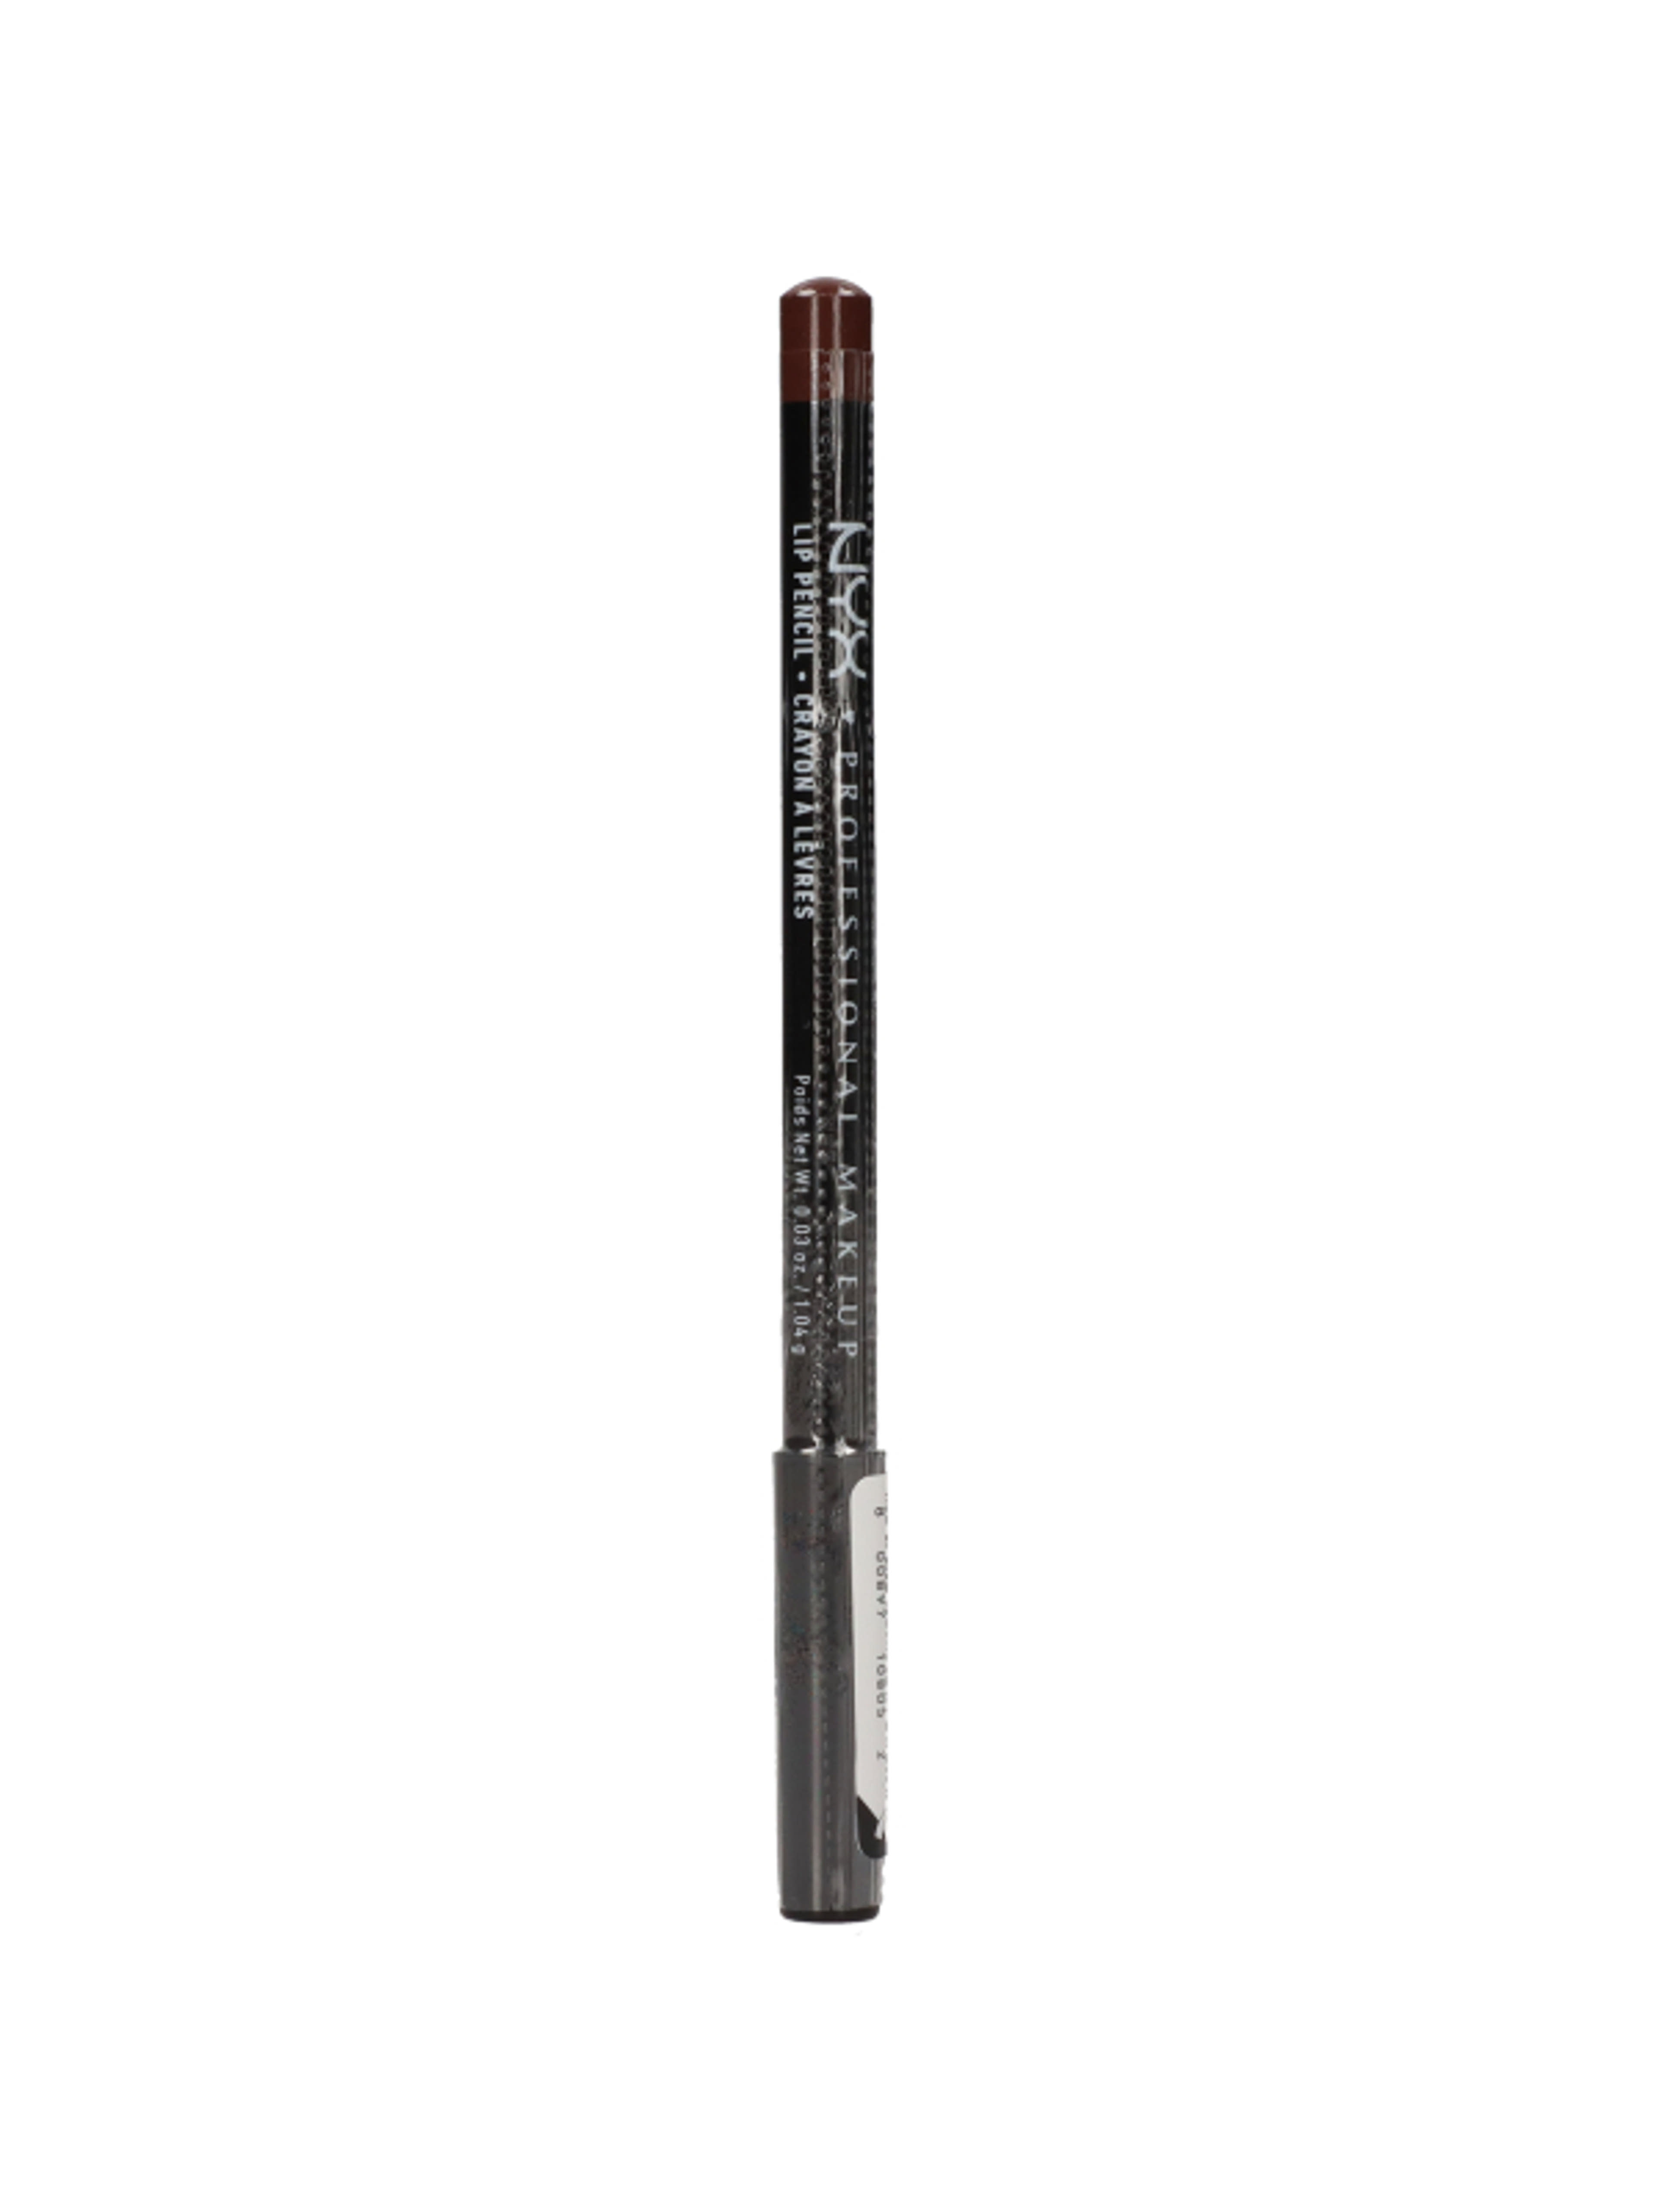 NYX Professional Makeup Slim Lip Pencil ajakkontúr ceruza, Capuccino - 1 db-2